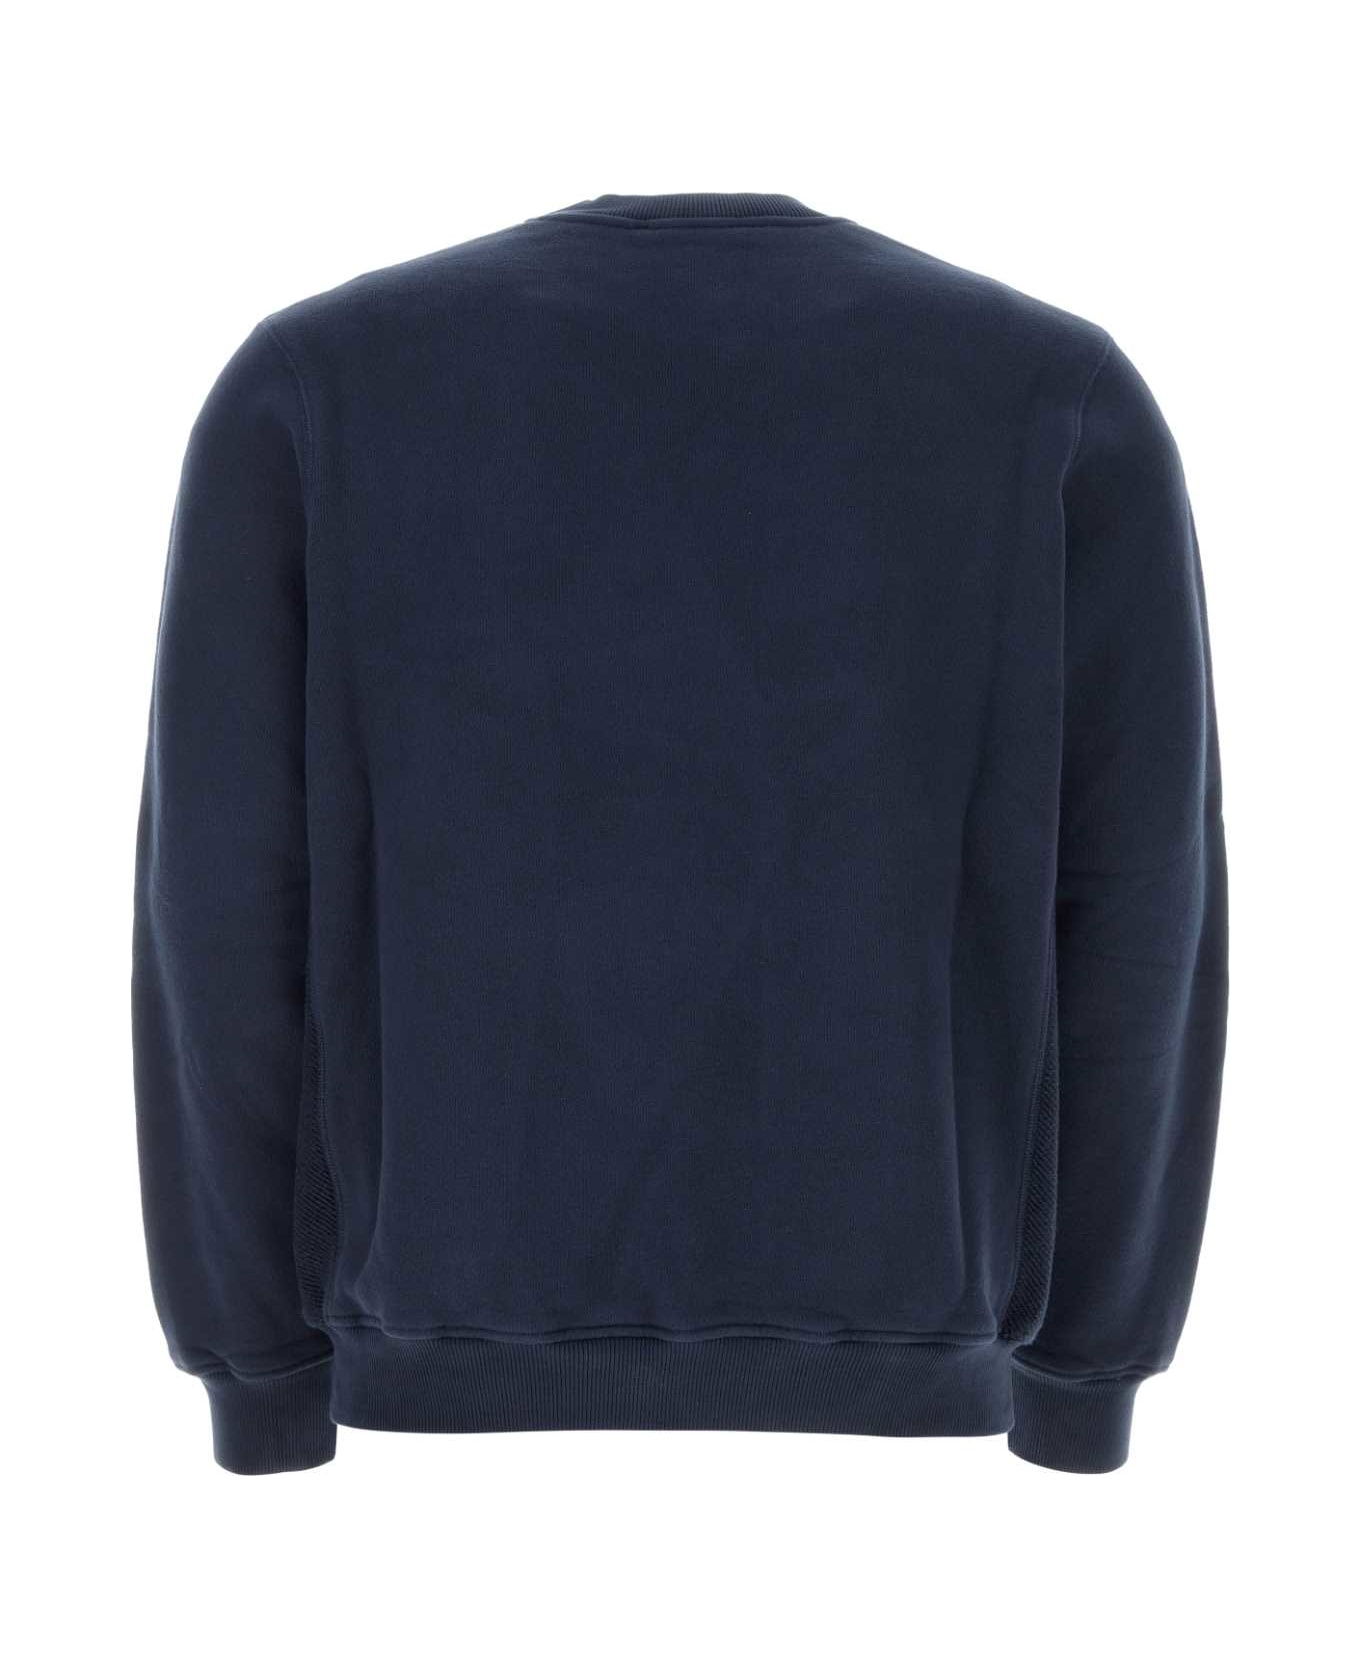 Casablanca Navy Blue Cotton Sweatshirt - SOFSPILOONAV